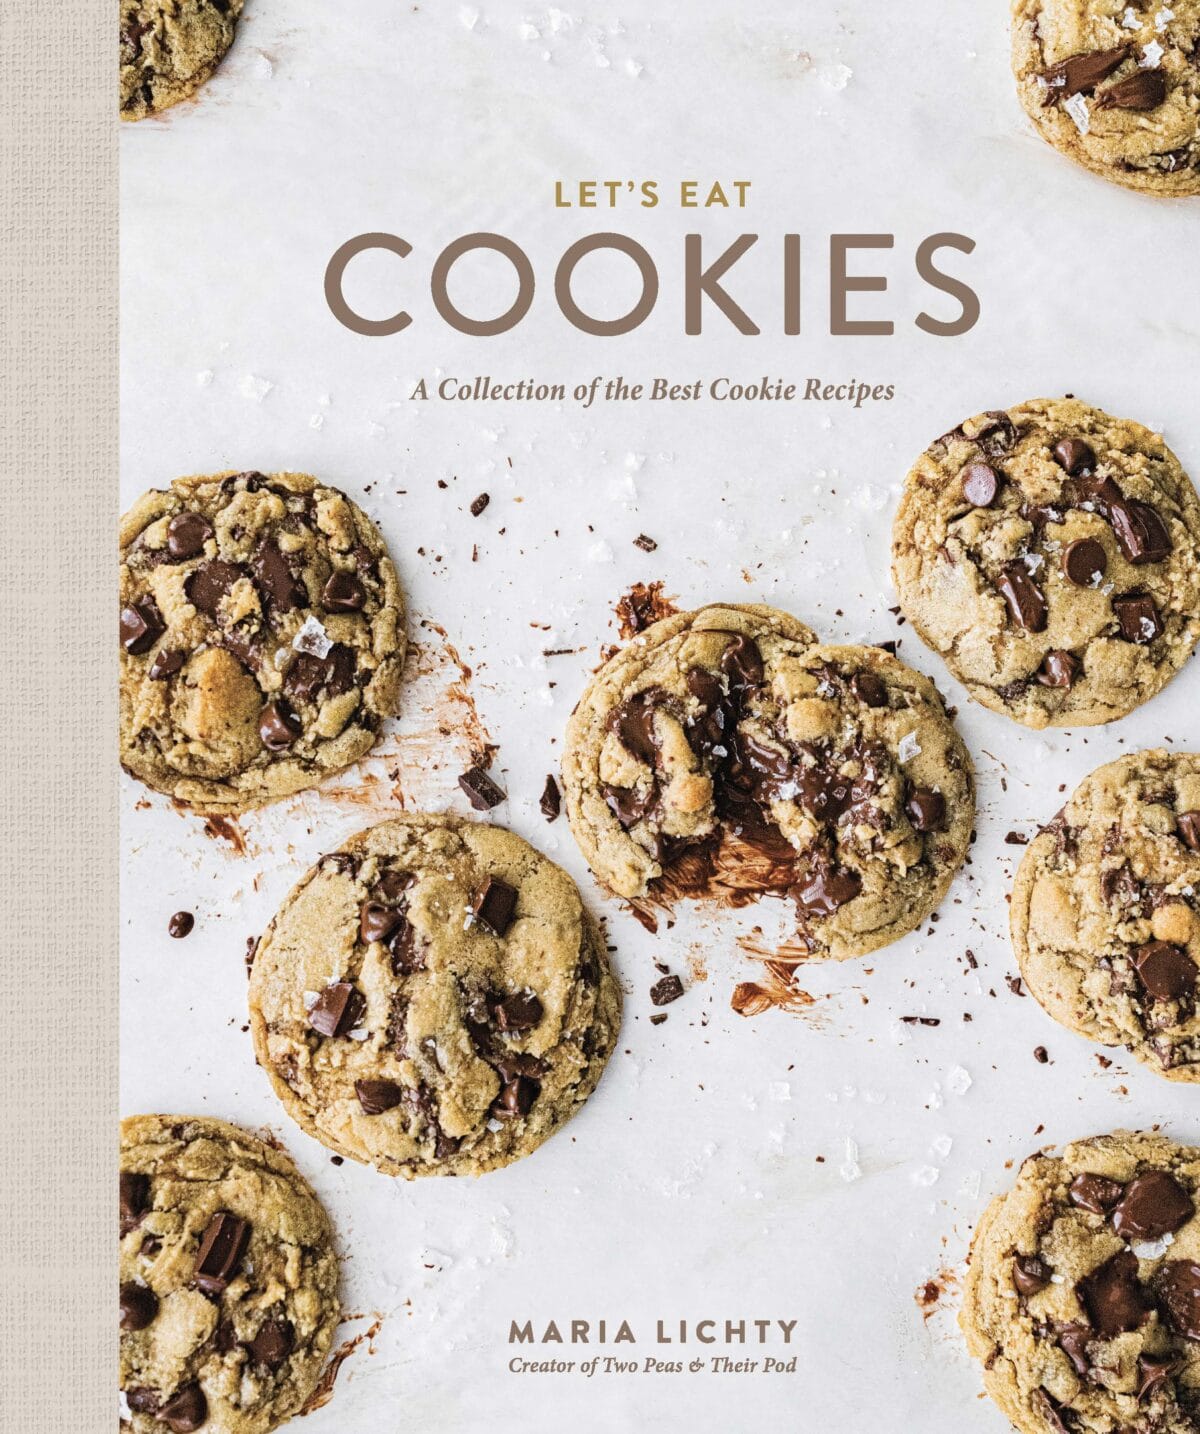 Let's eat cookies cookie cookbook.